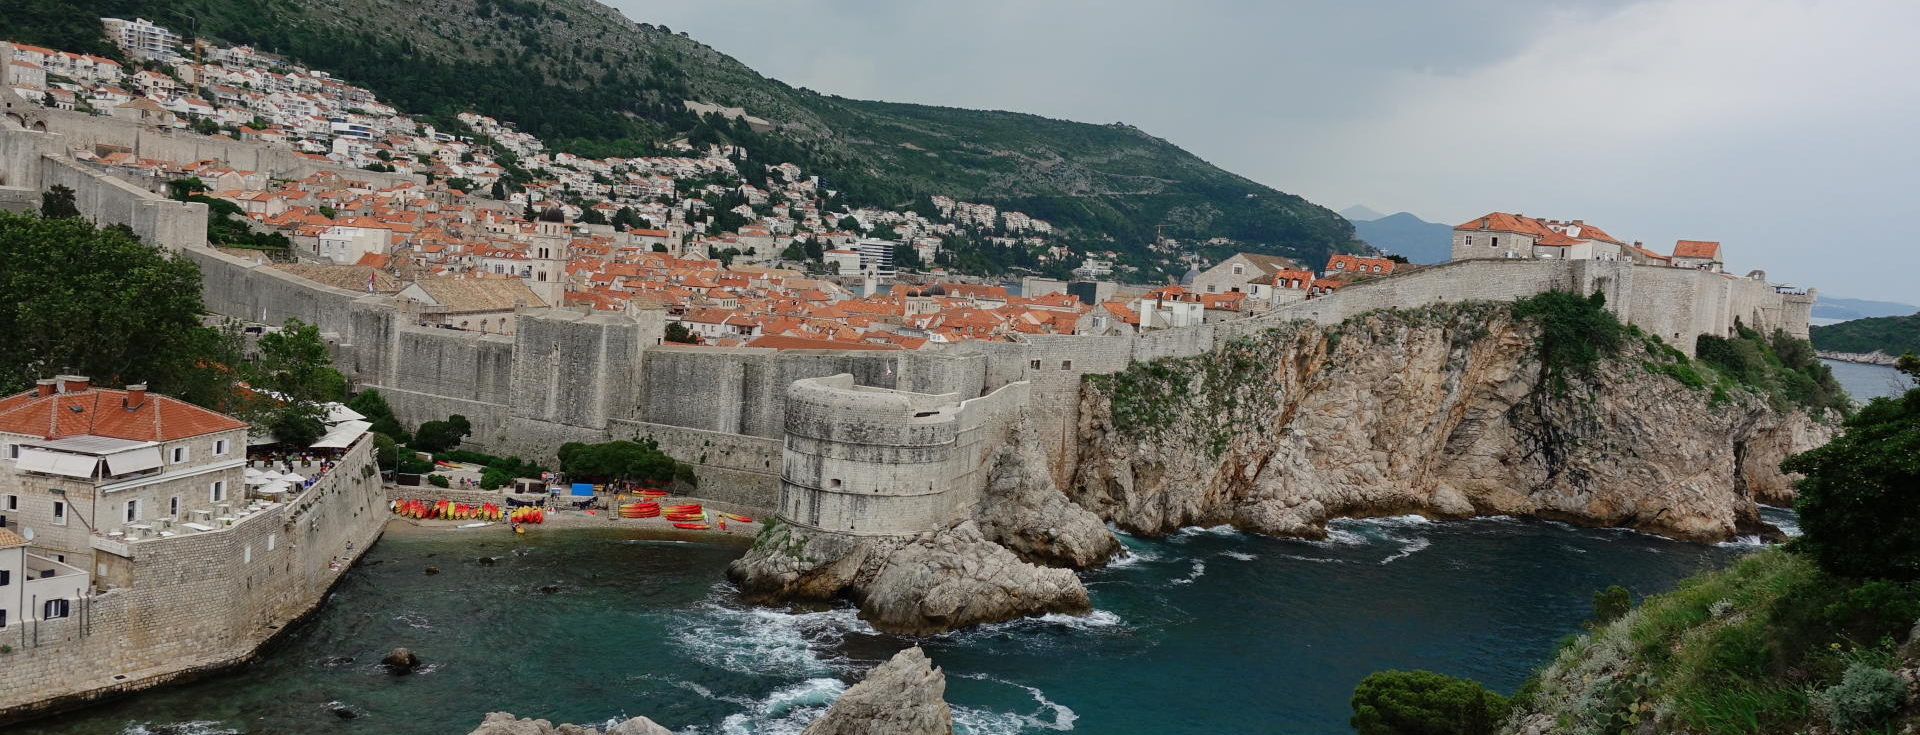 Croatia Itinerary - Two weeks along the Dalmatian Coast